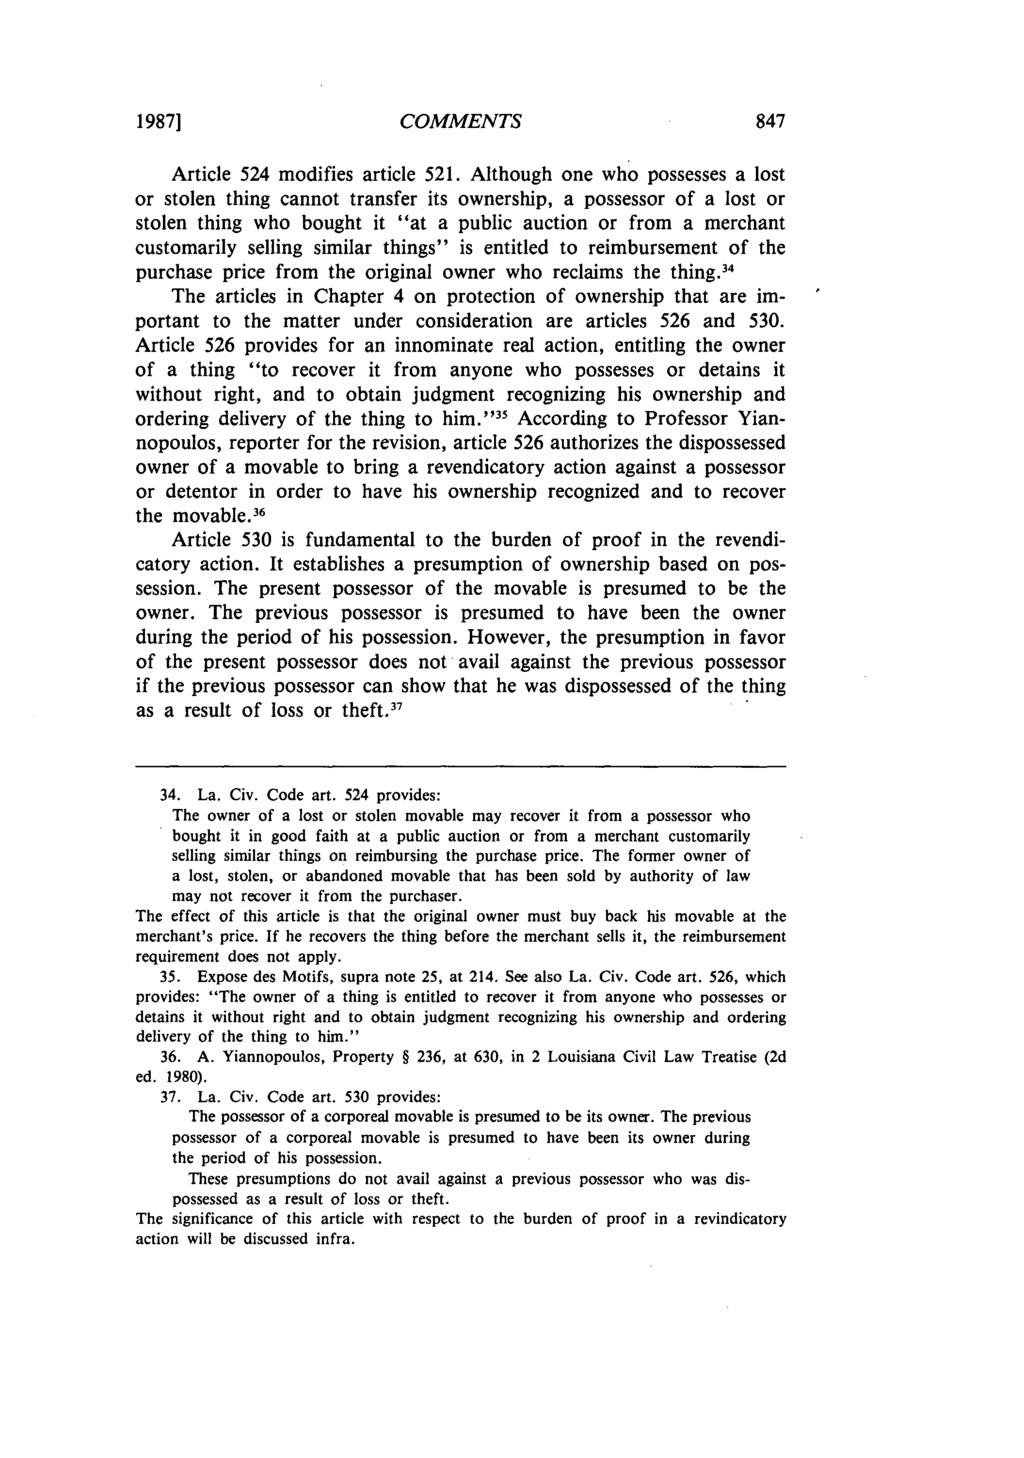 19871 COMMENTS Article 524 modifies article 521.